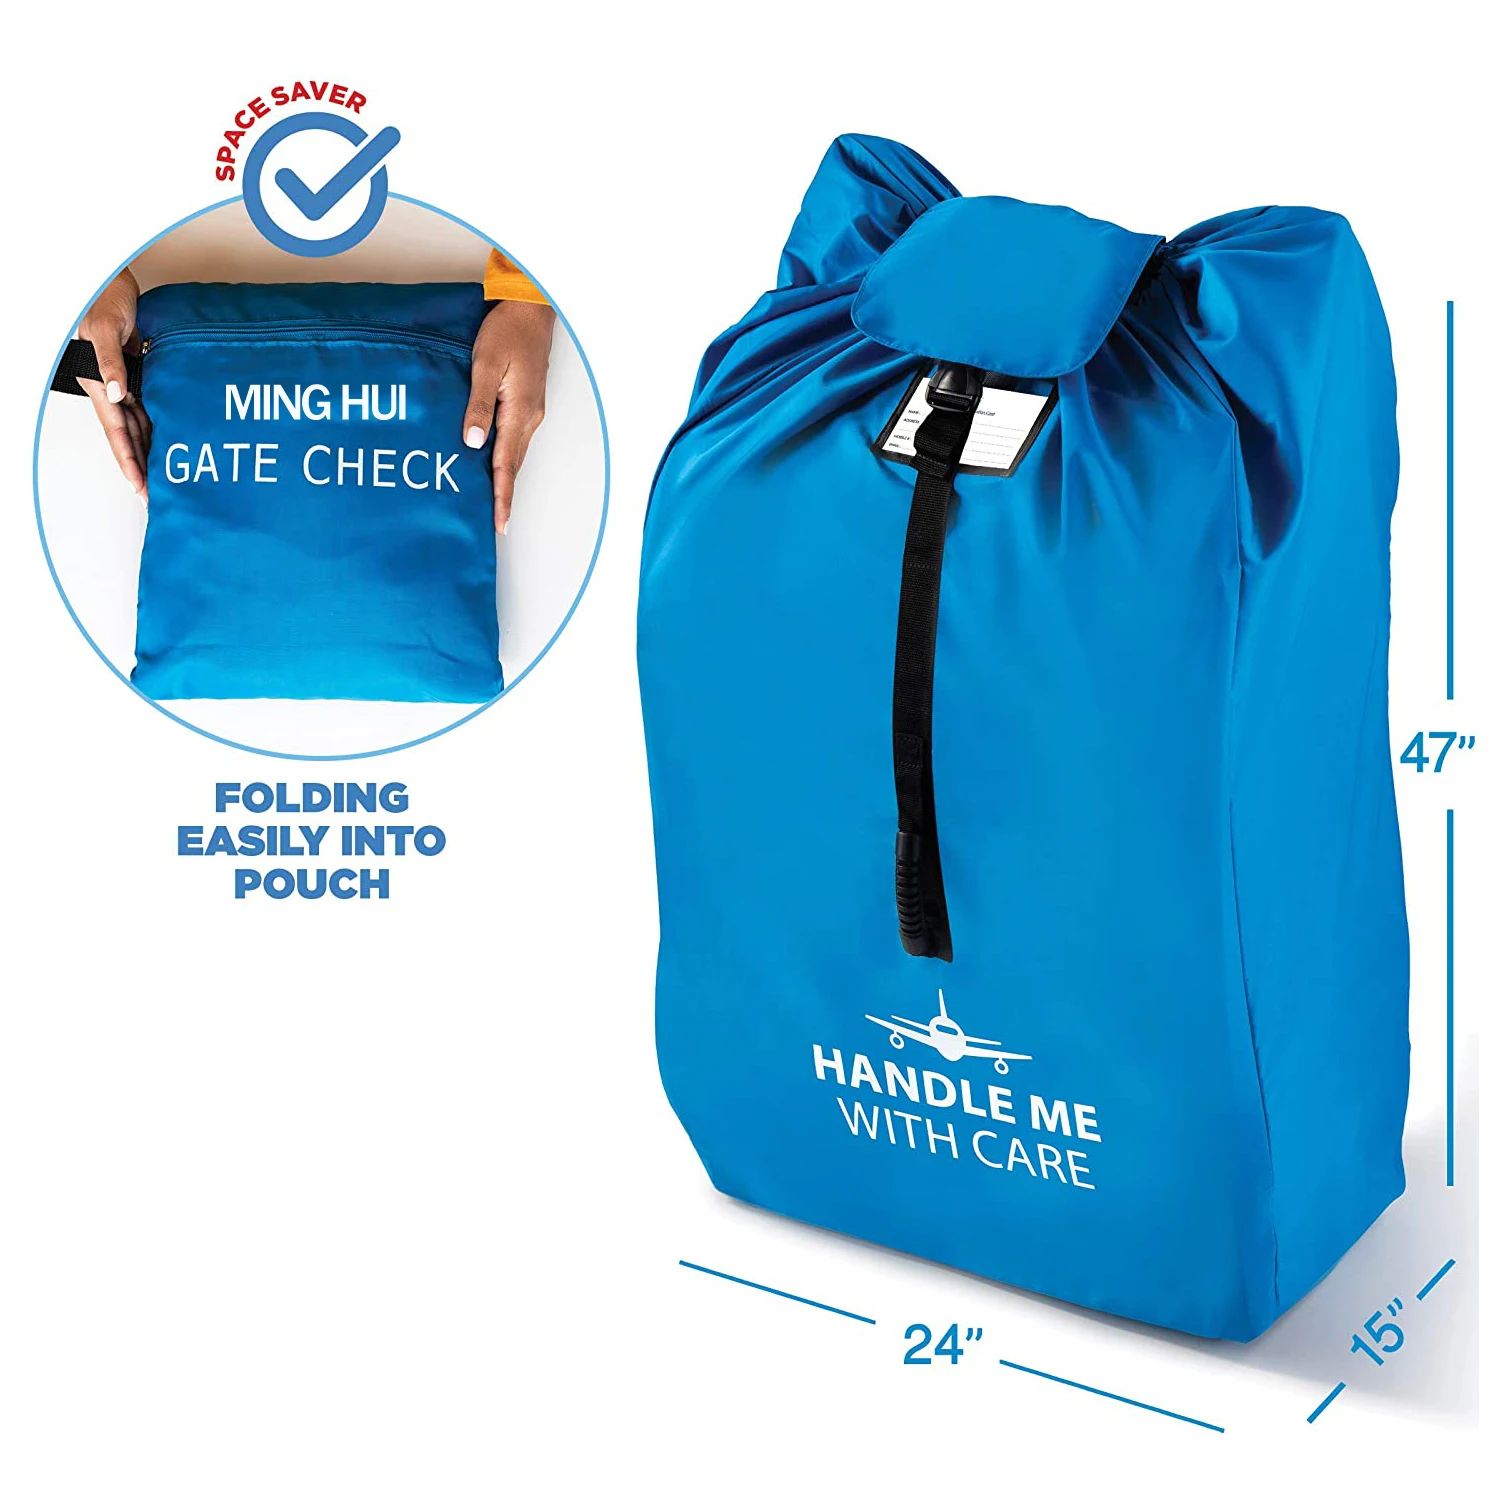 Stroller Travel Bag for Airplane Large Standard or Double Stroller Gate Check Bag 